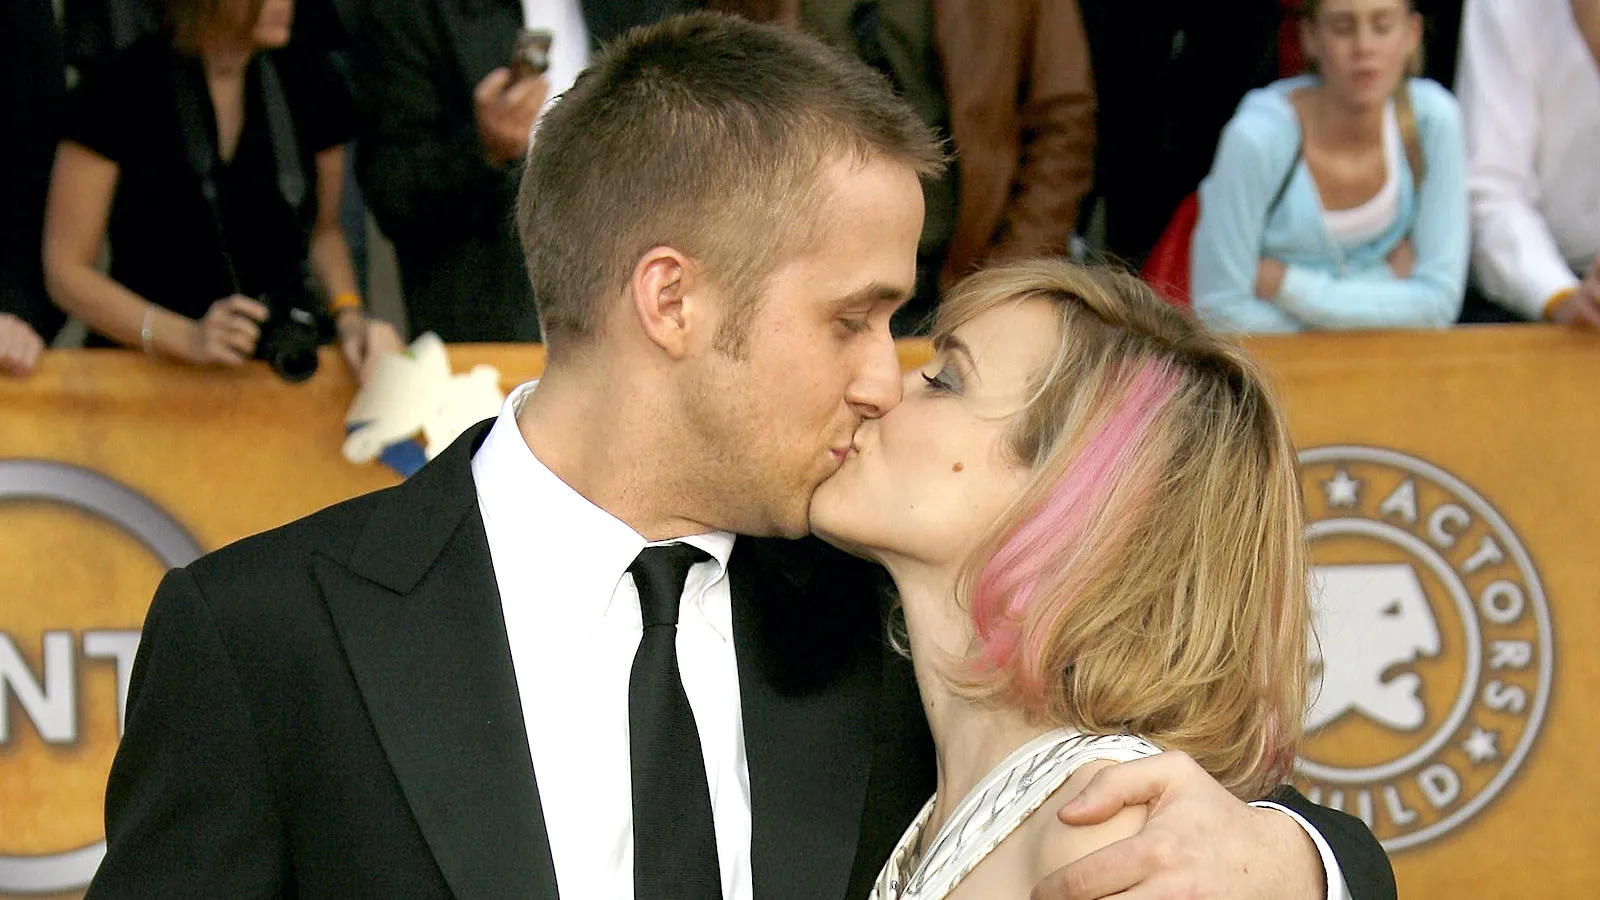 Ryan Gosling and Rachel McAdams kissing on the red carpet